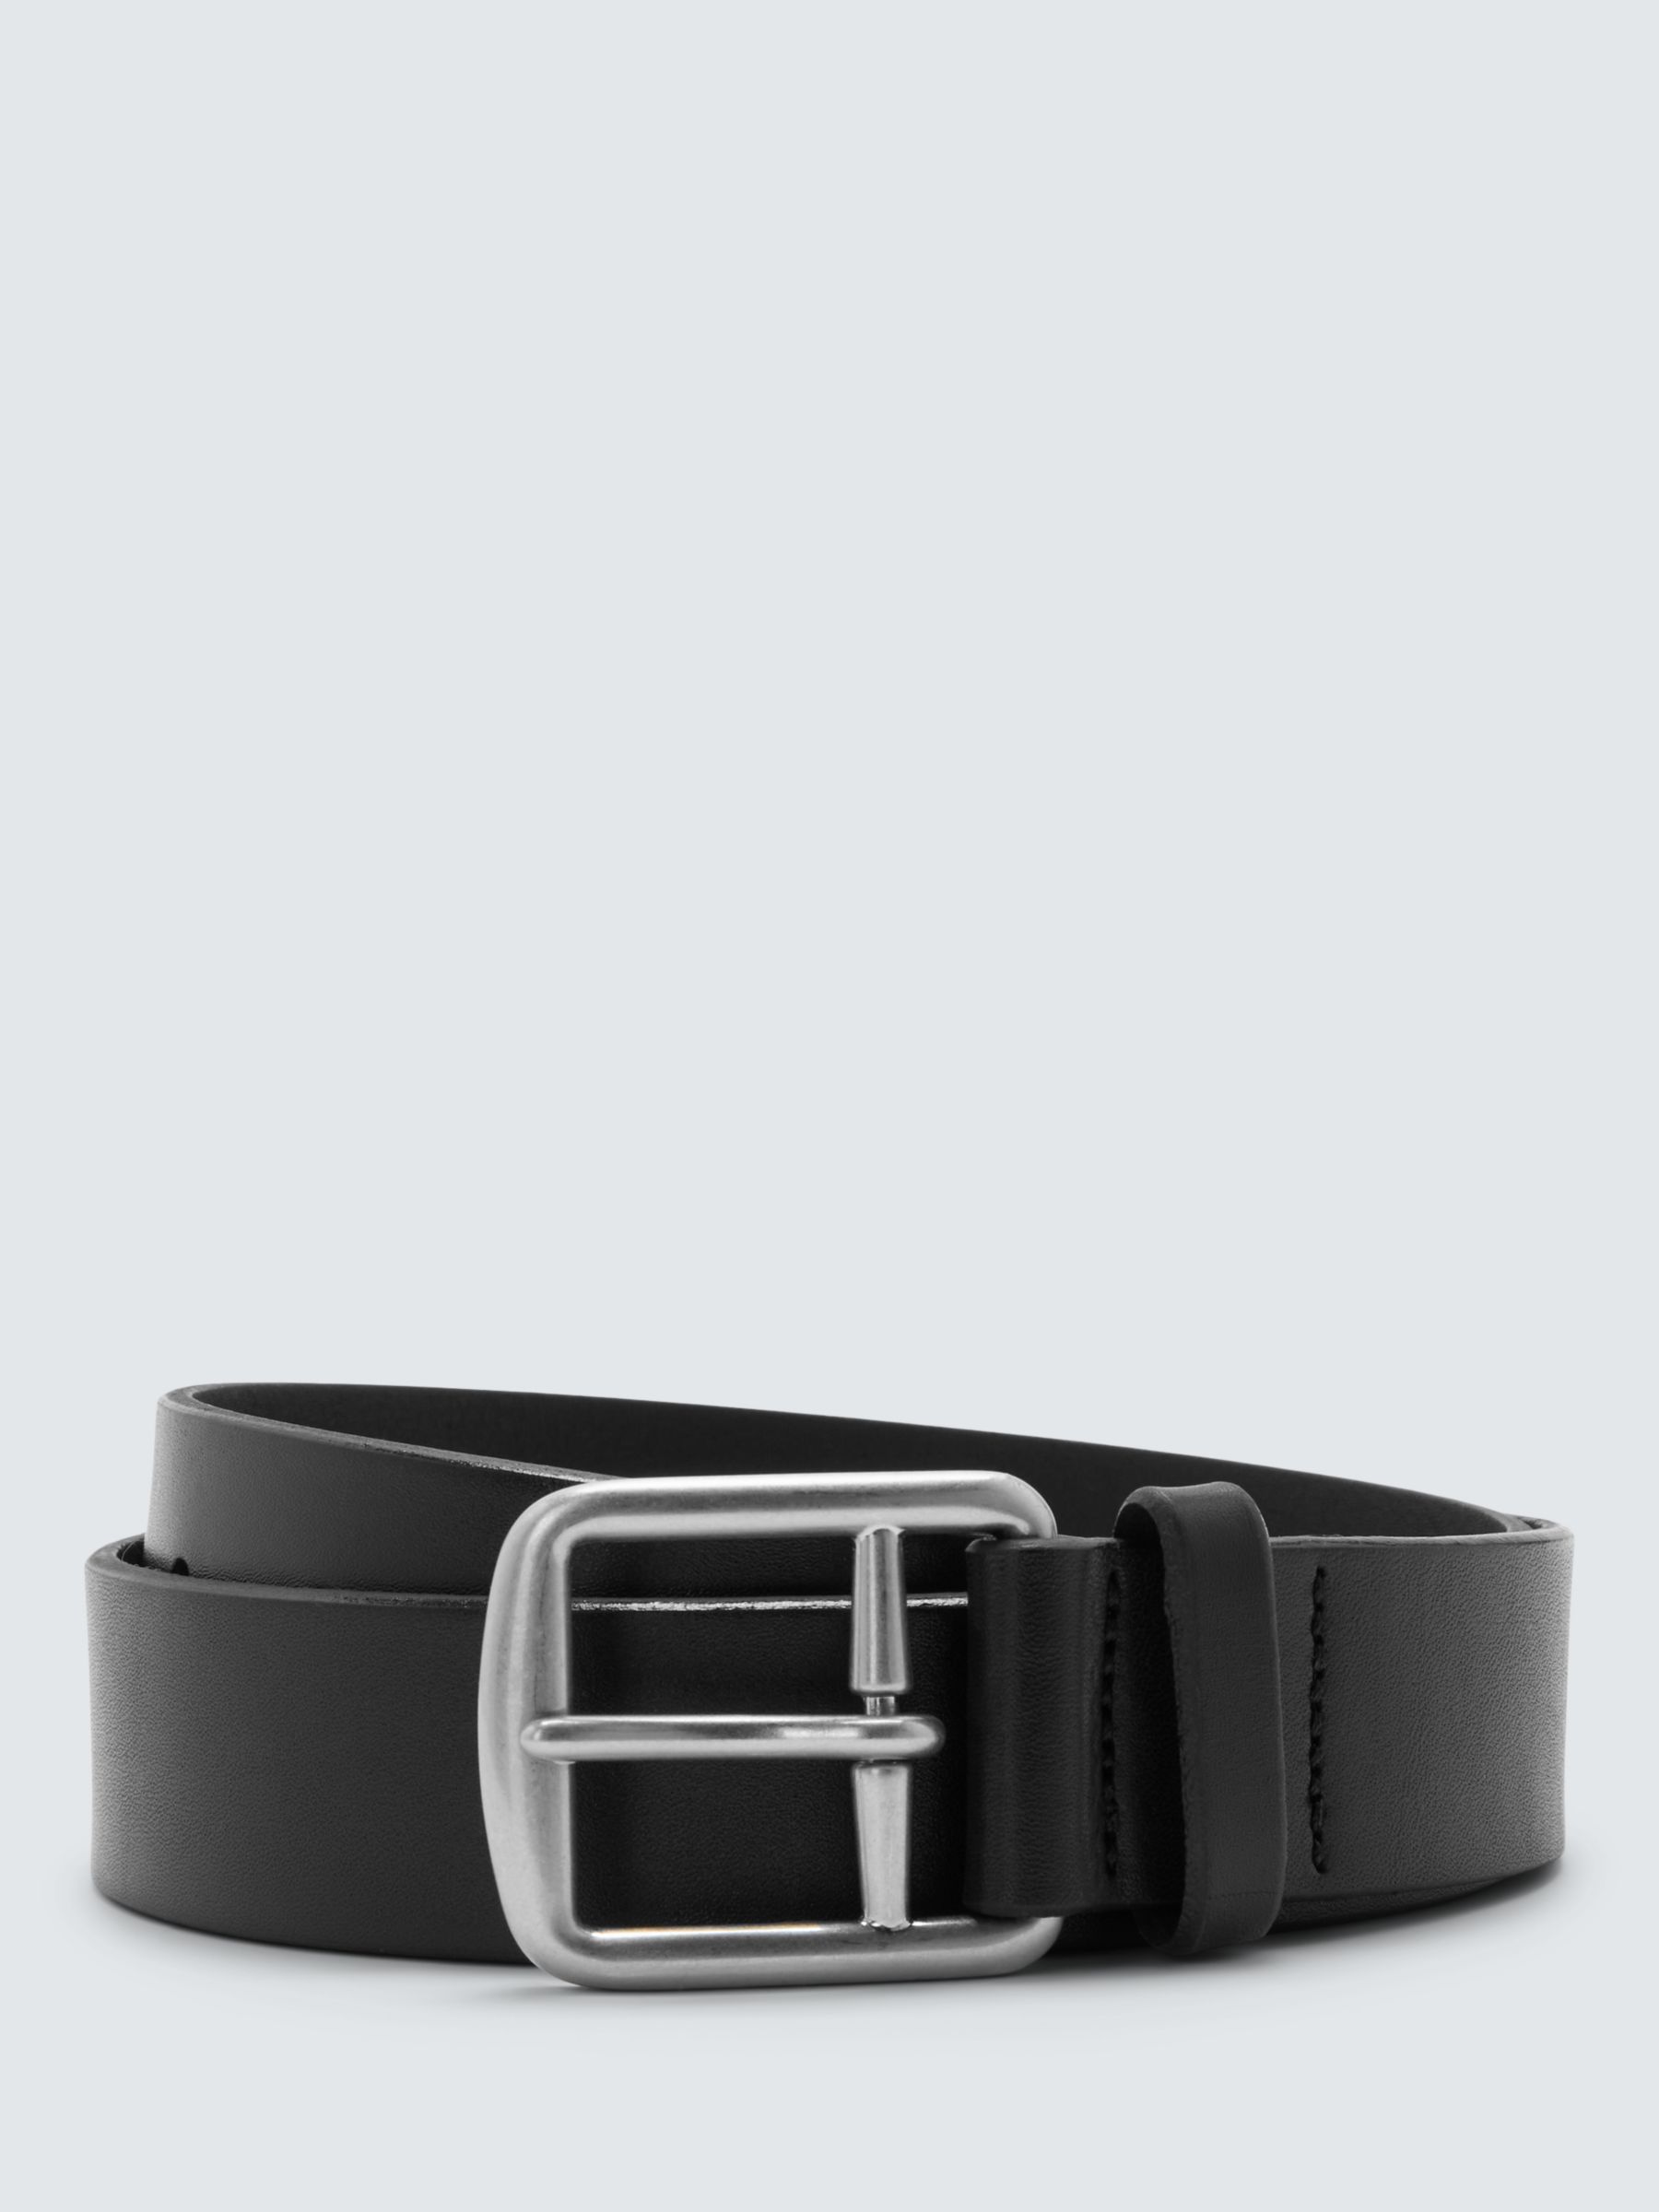 Polo Ralph Lauren Leather Belt, Black, 38